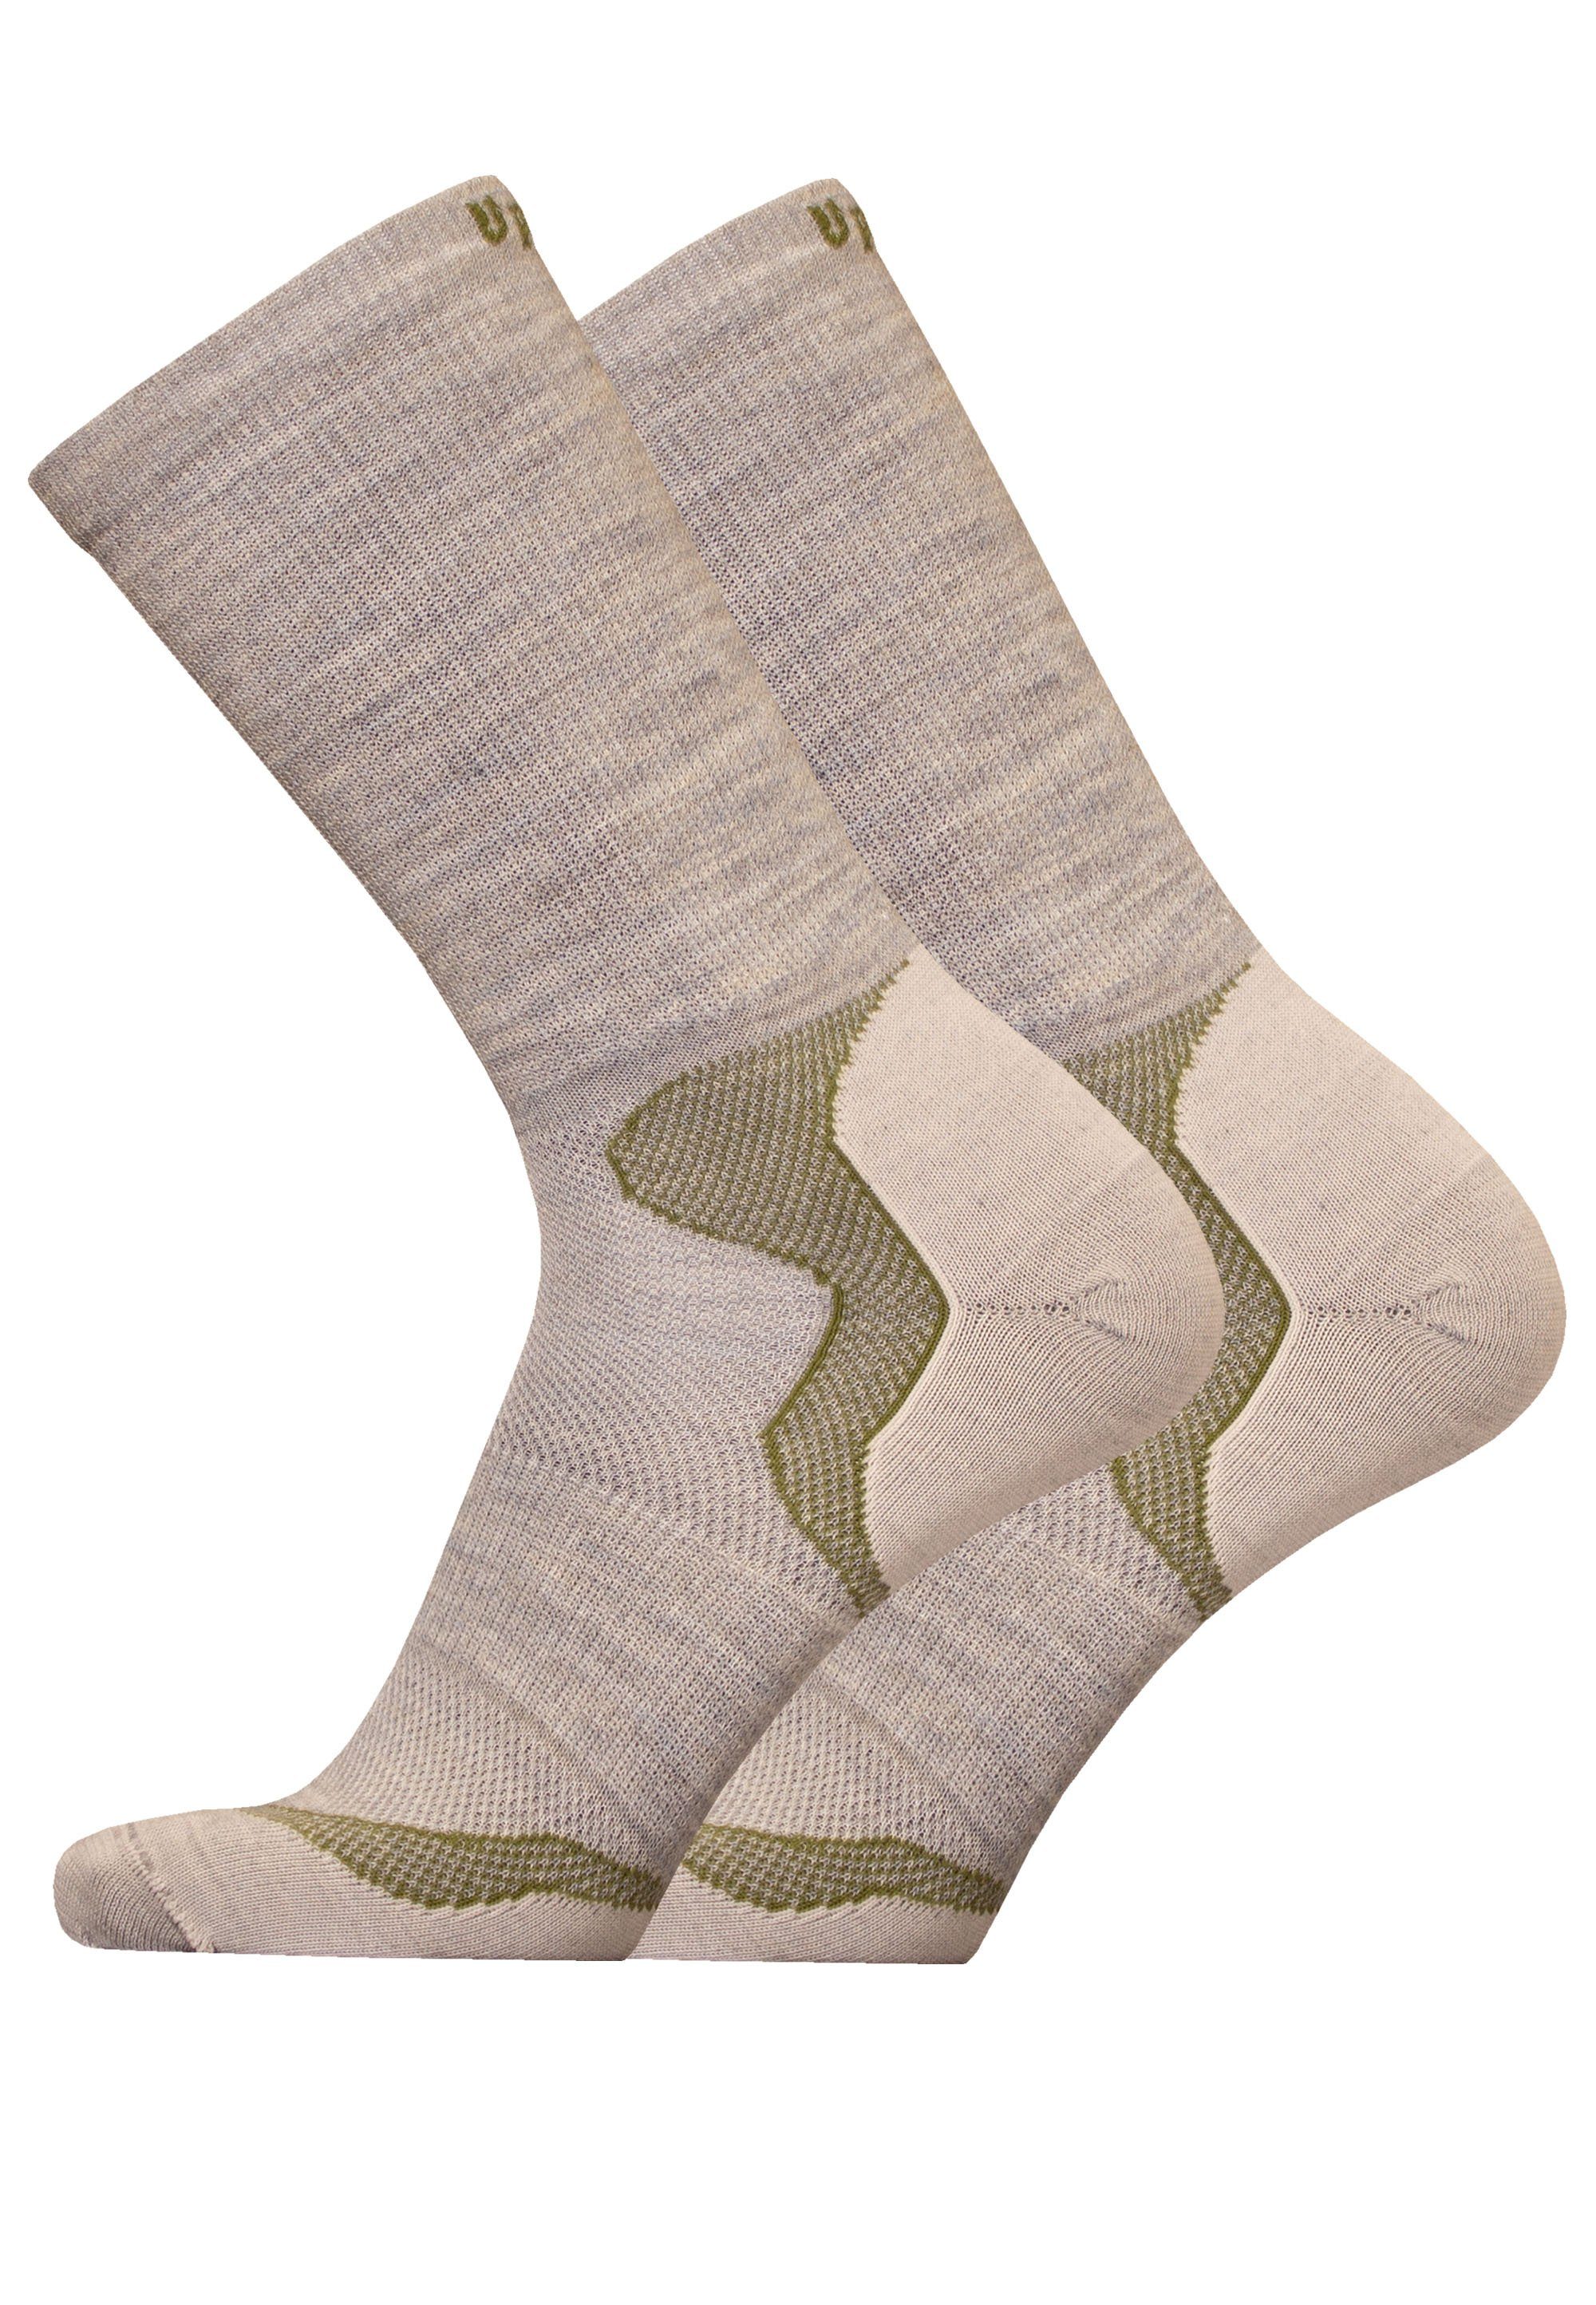 UphillSport Socken MALLA (2-Paar) mit atmungsaktiver Funktion hellgrau-meliert